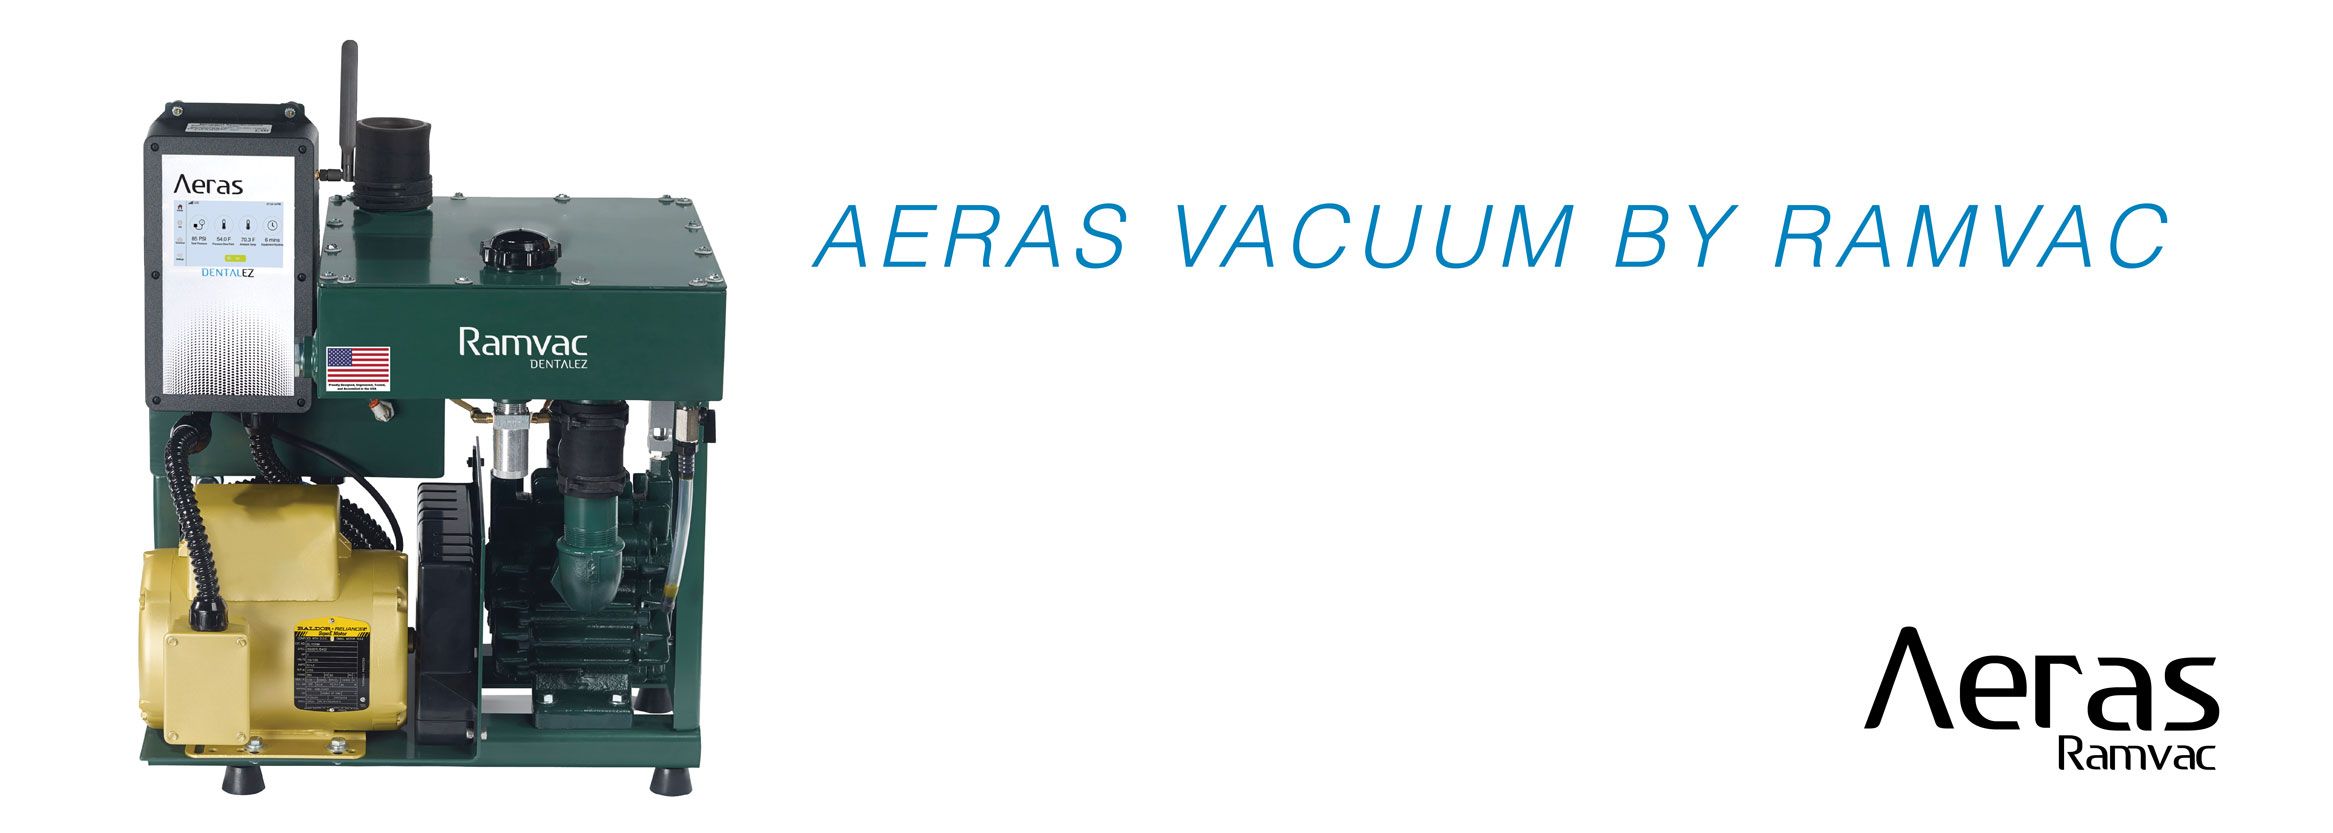 Aeras vacuum by ramvac